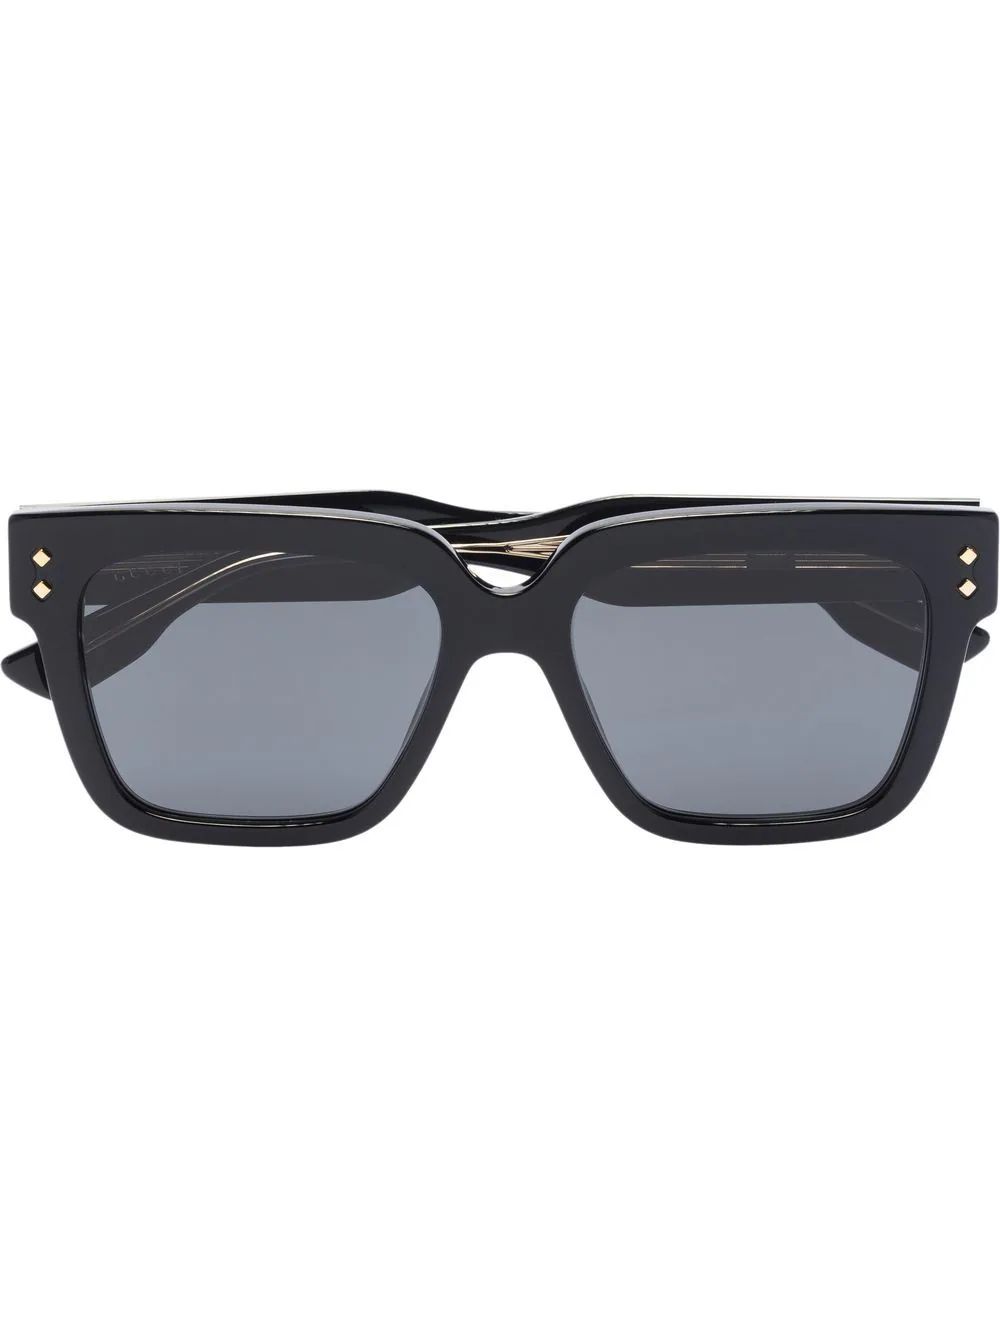 New SeasonGucci Eyewearoversize square-frame sunglasses | Farfetch Global